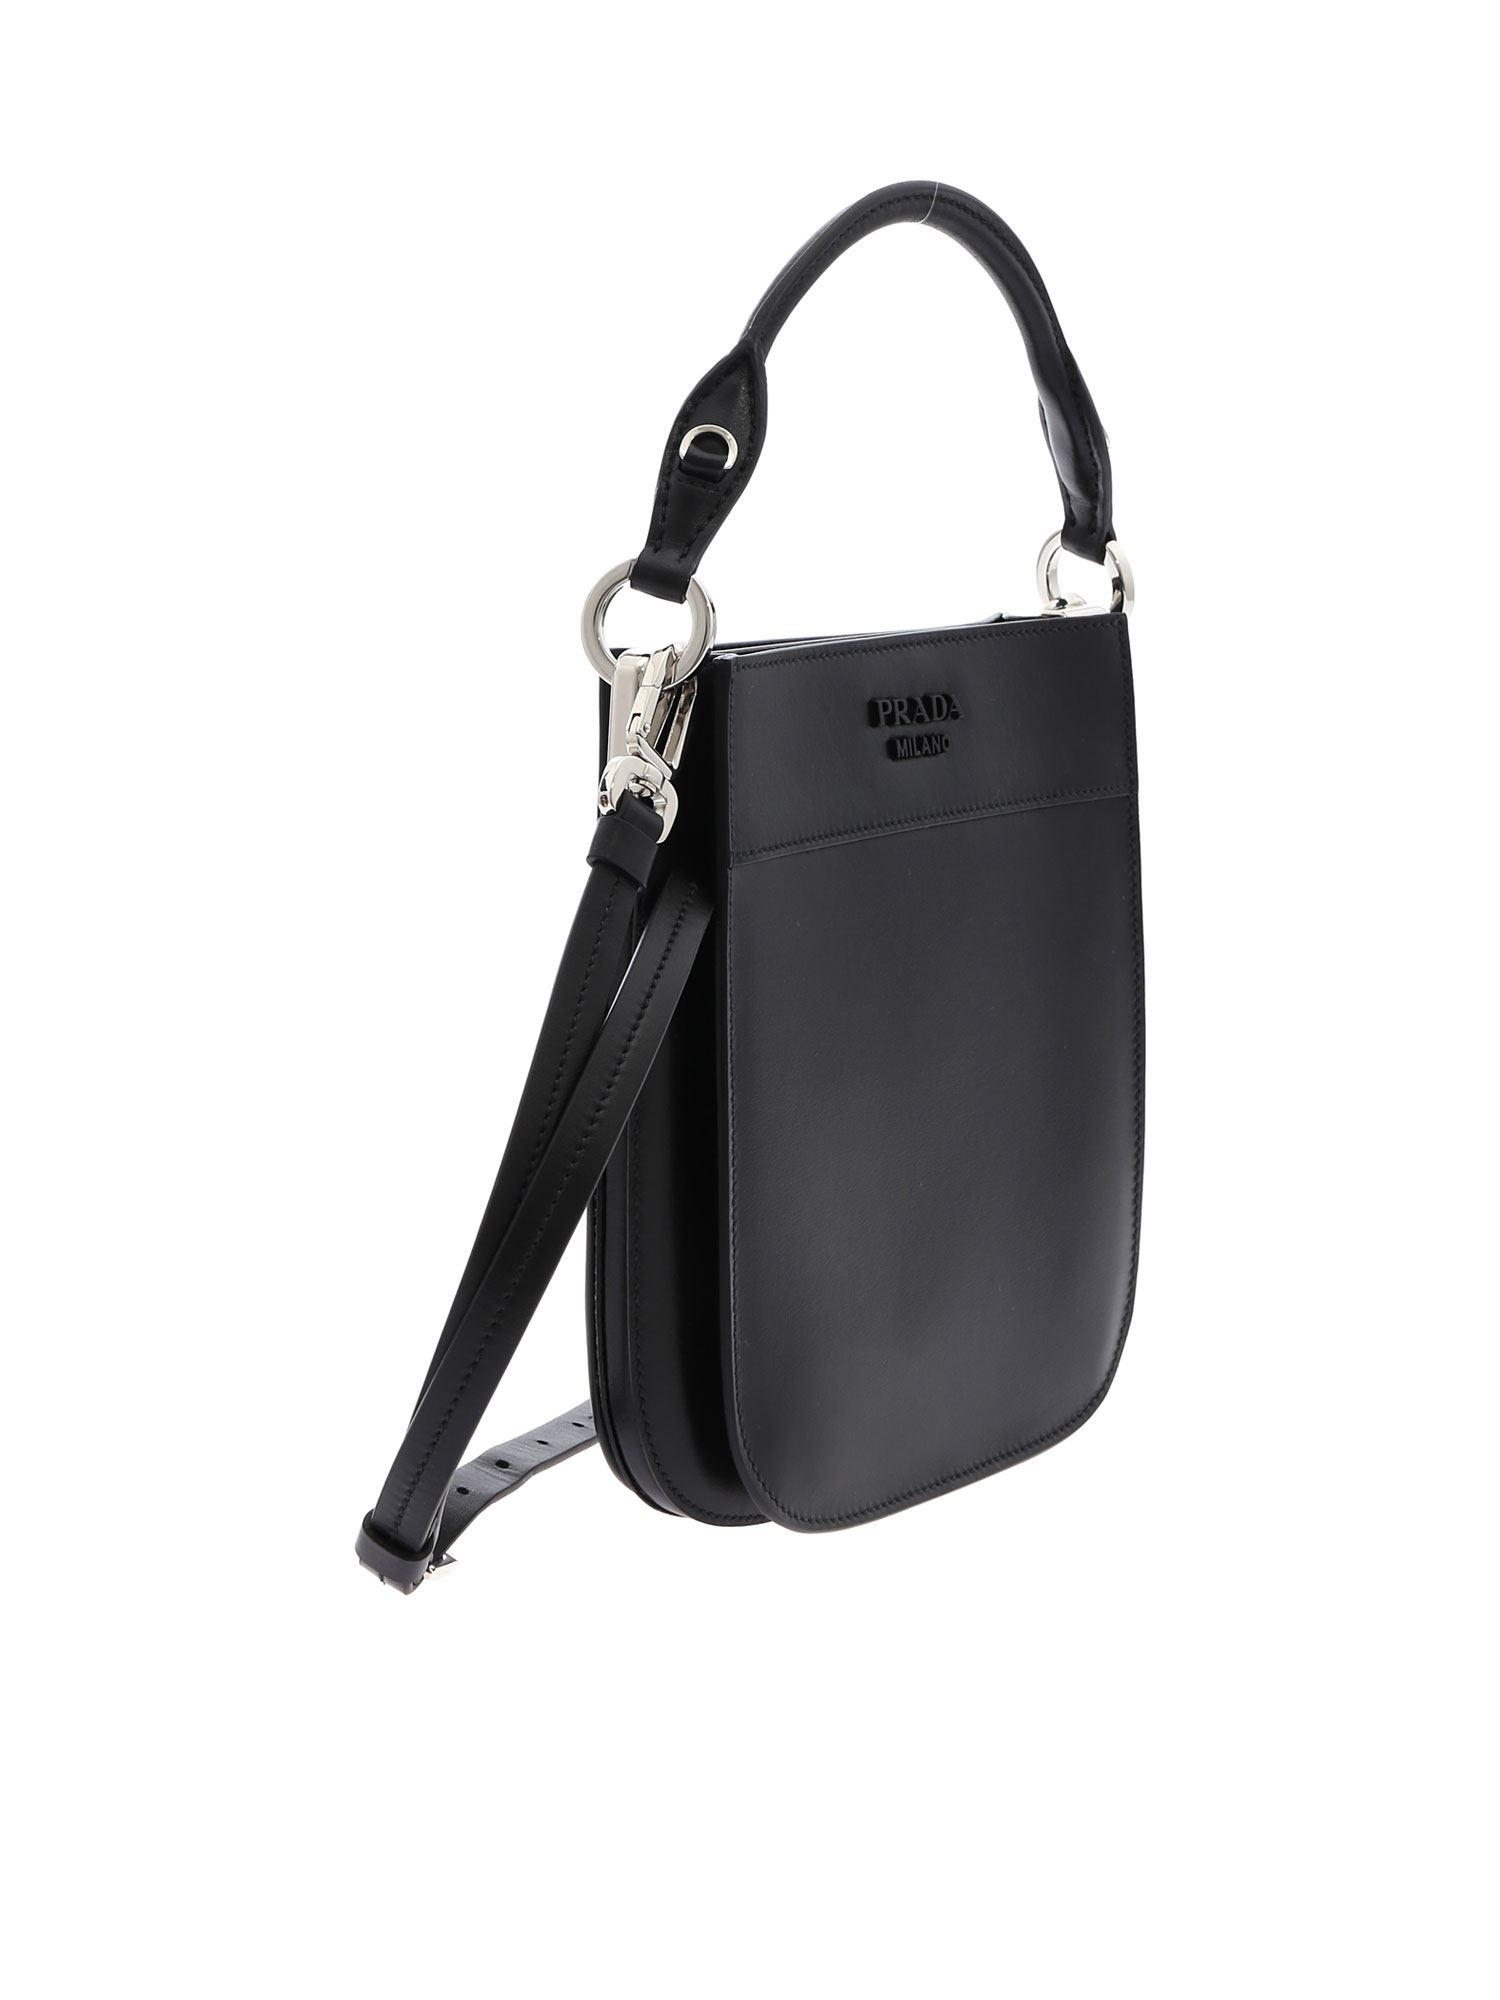 Prada Shoulder Bag Margit Small Black in Black - Lyst